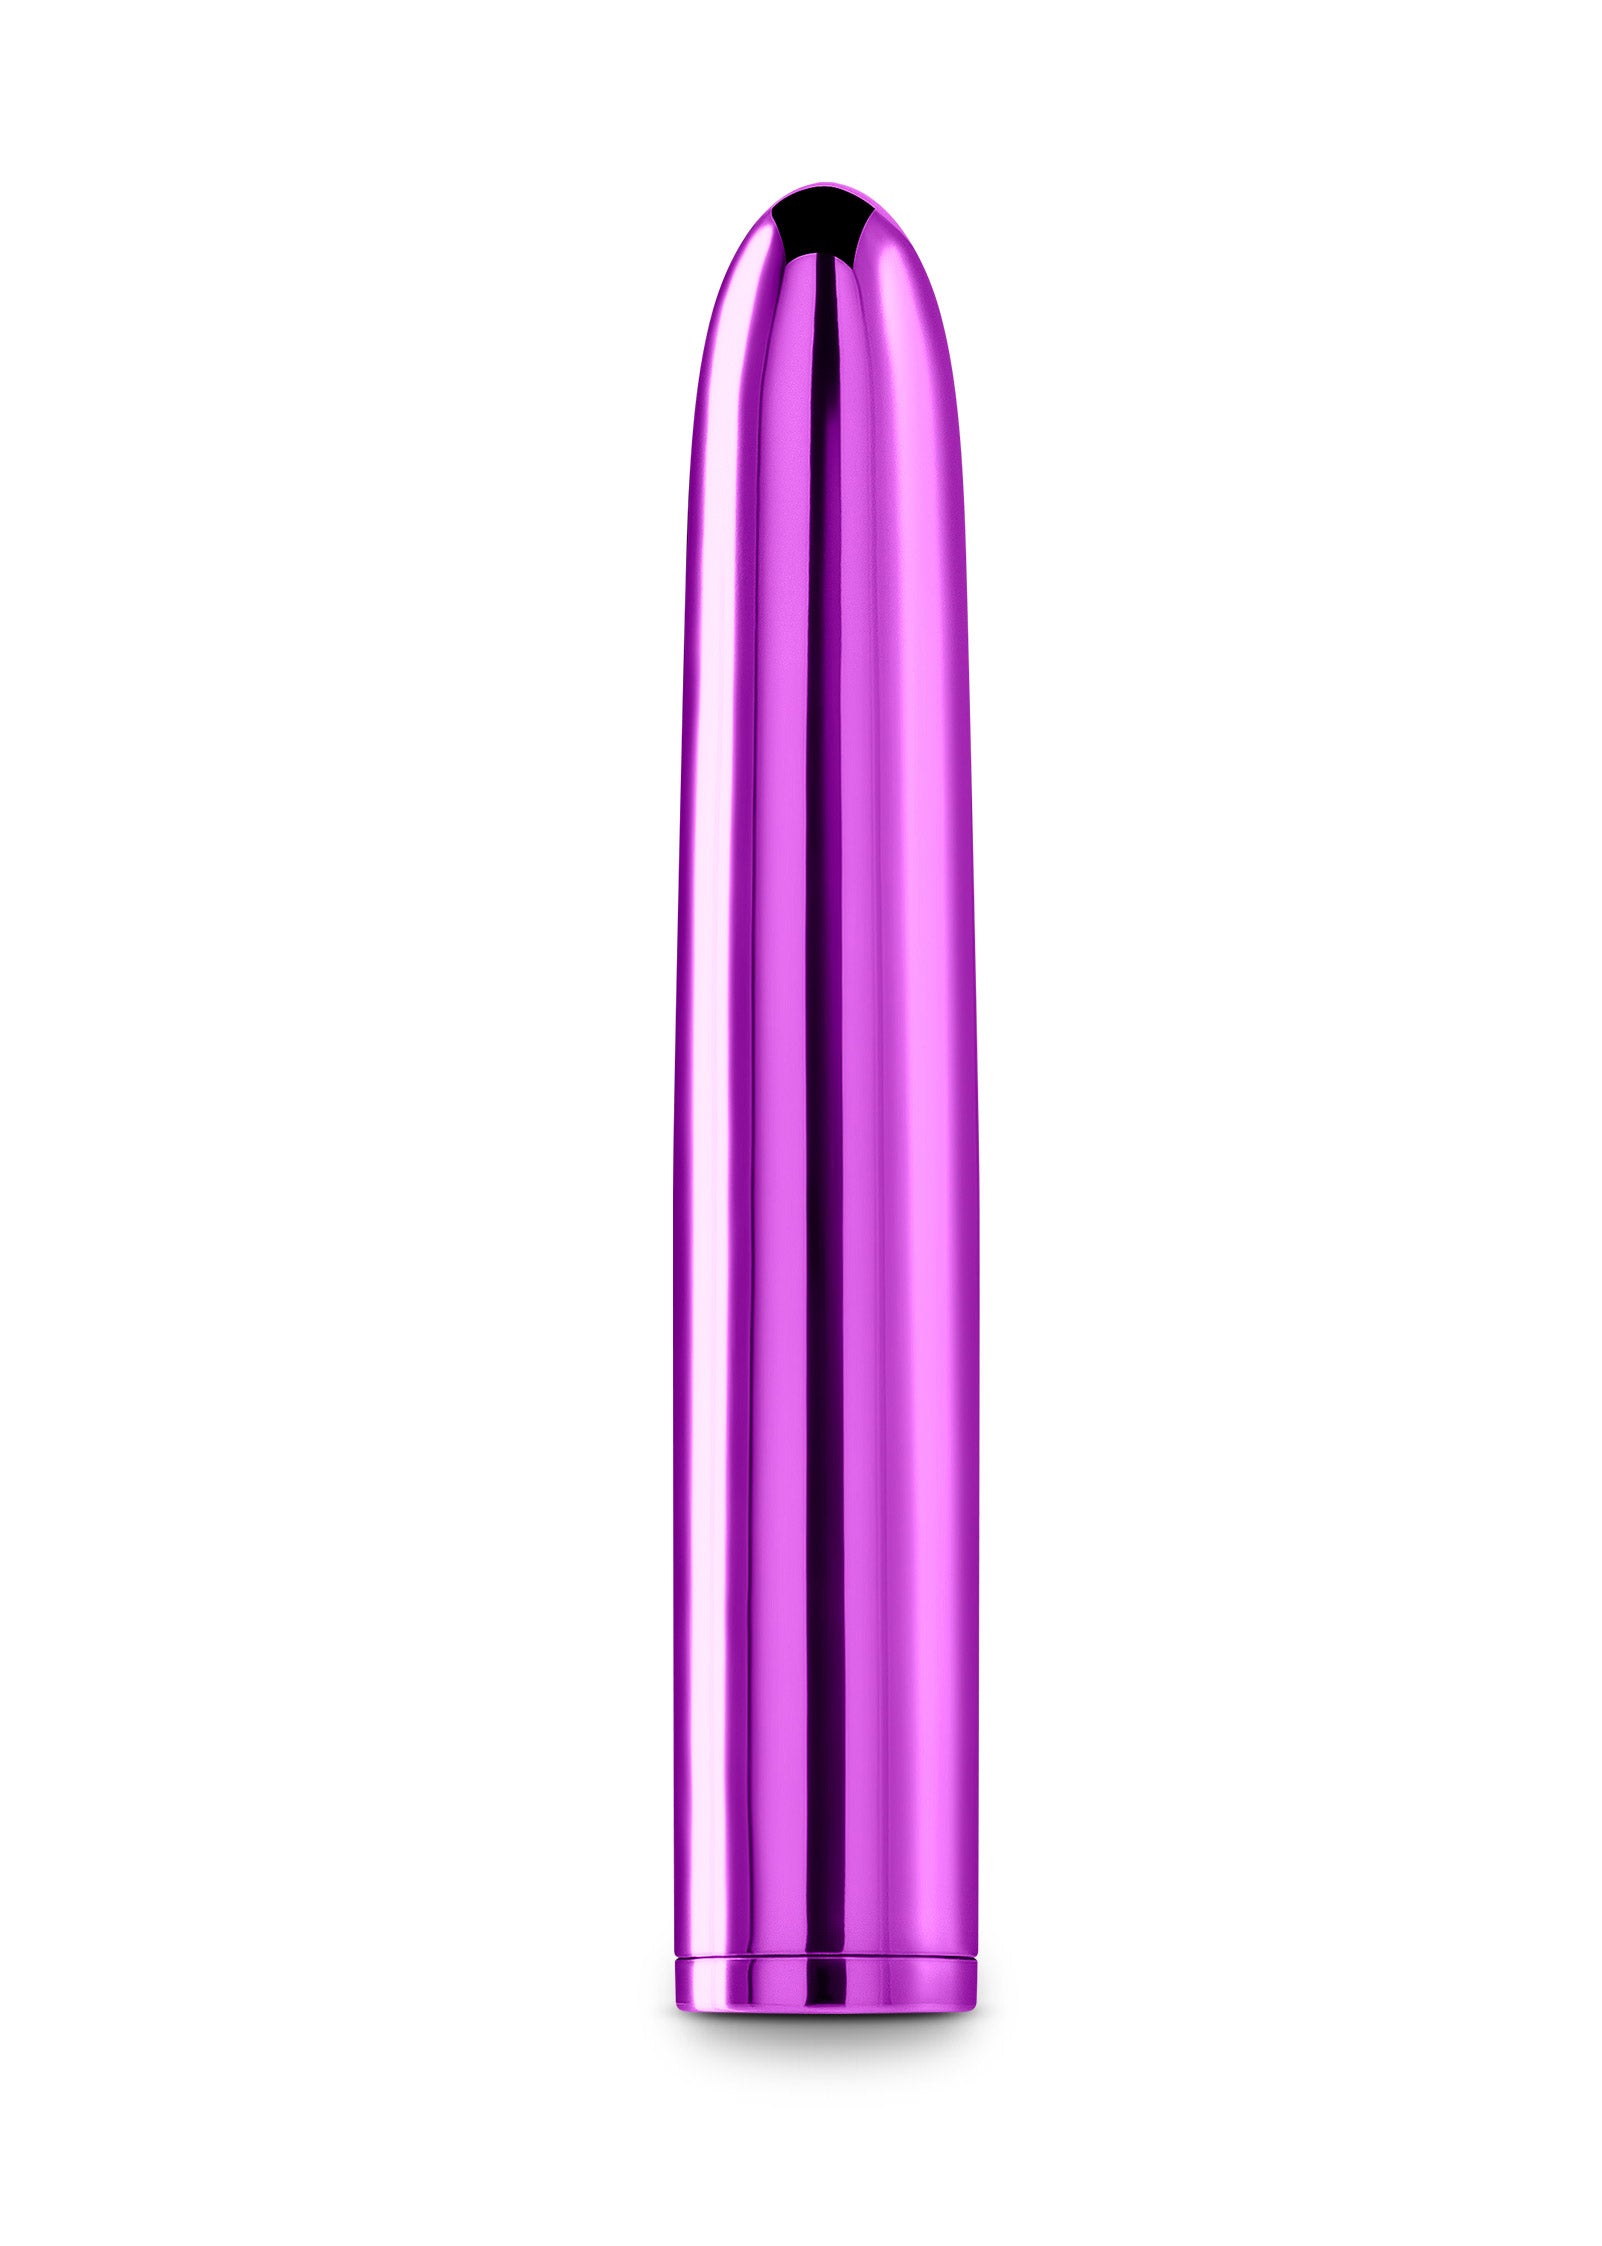 Chroma - 7 Inch Vibrator Purple